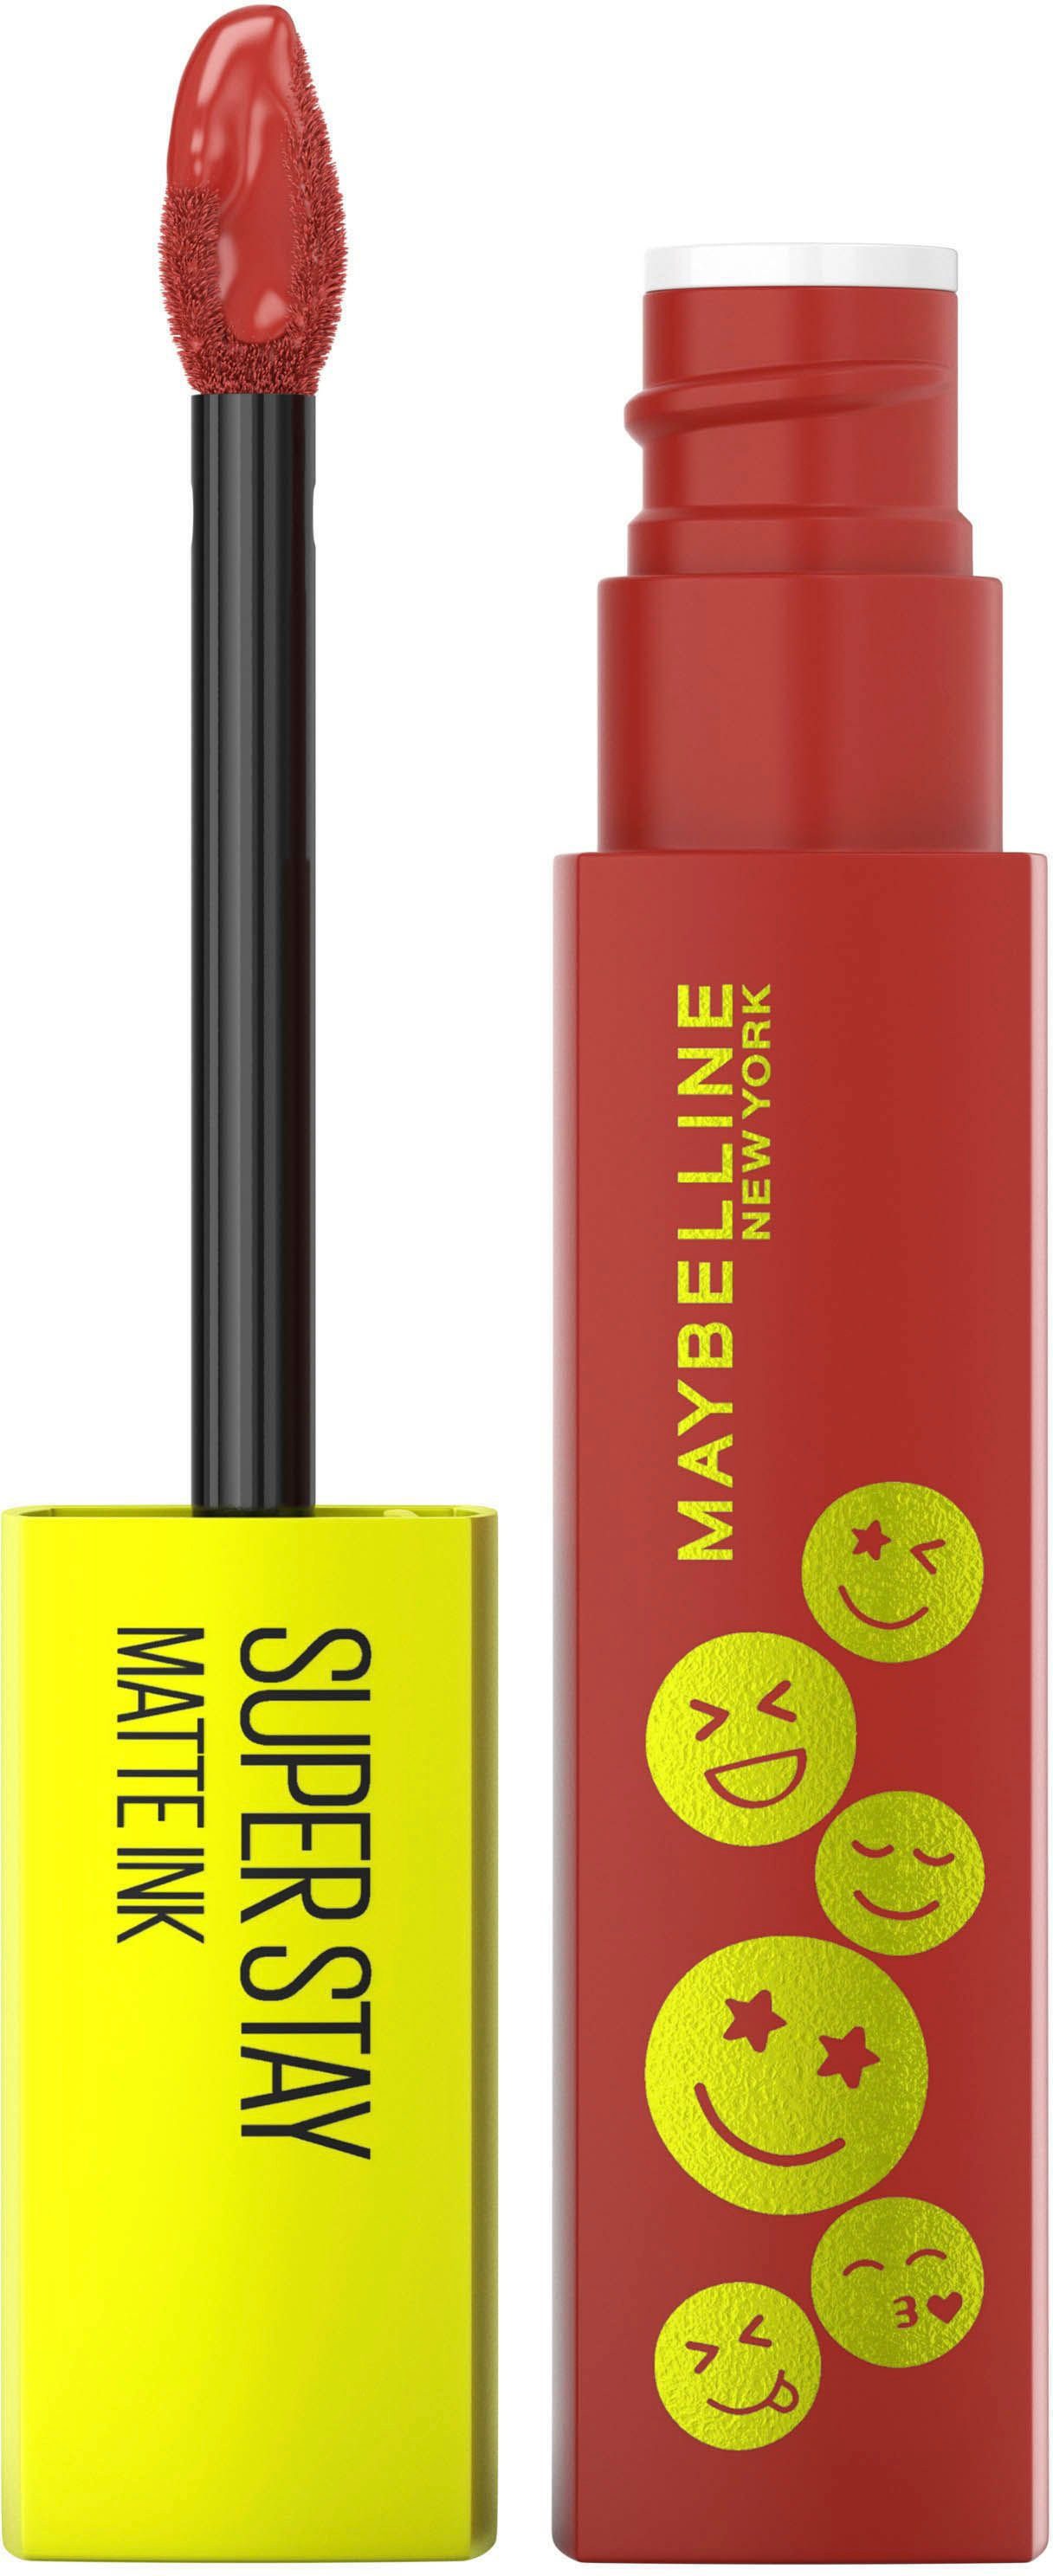 New NEW Lippenstift Stay Matte Ink Maybelline YORK Lippenstift York Super MAYBELLINE